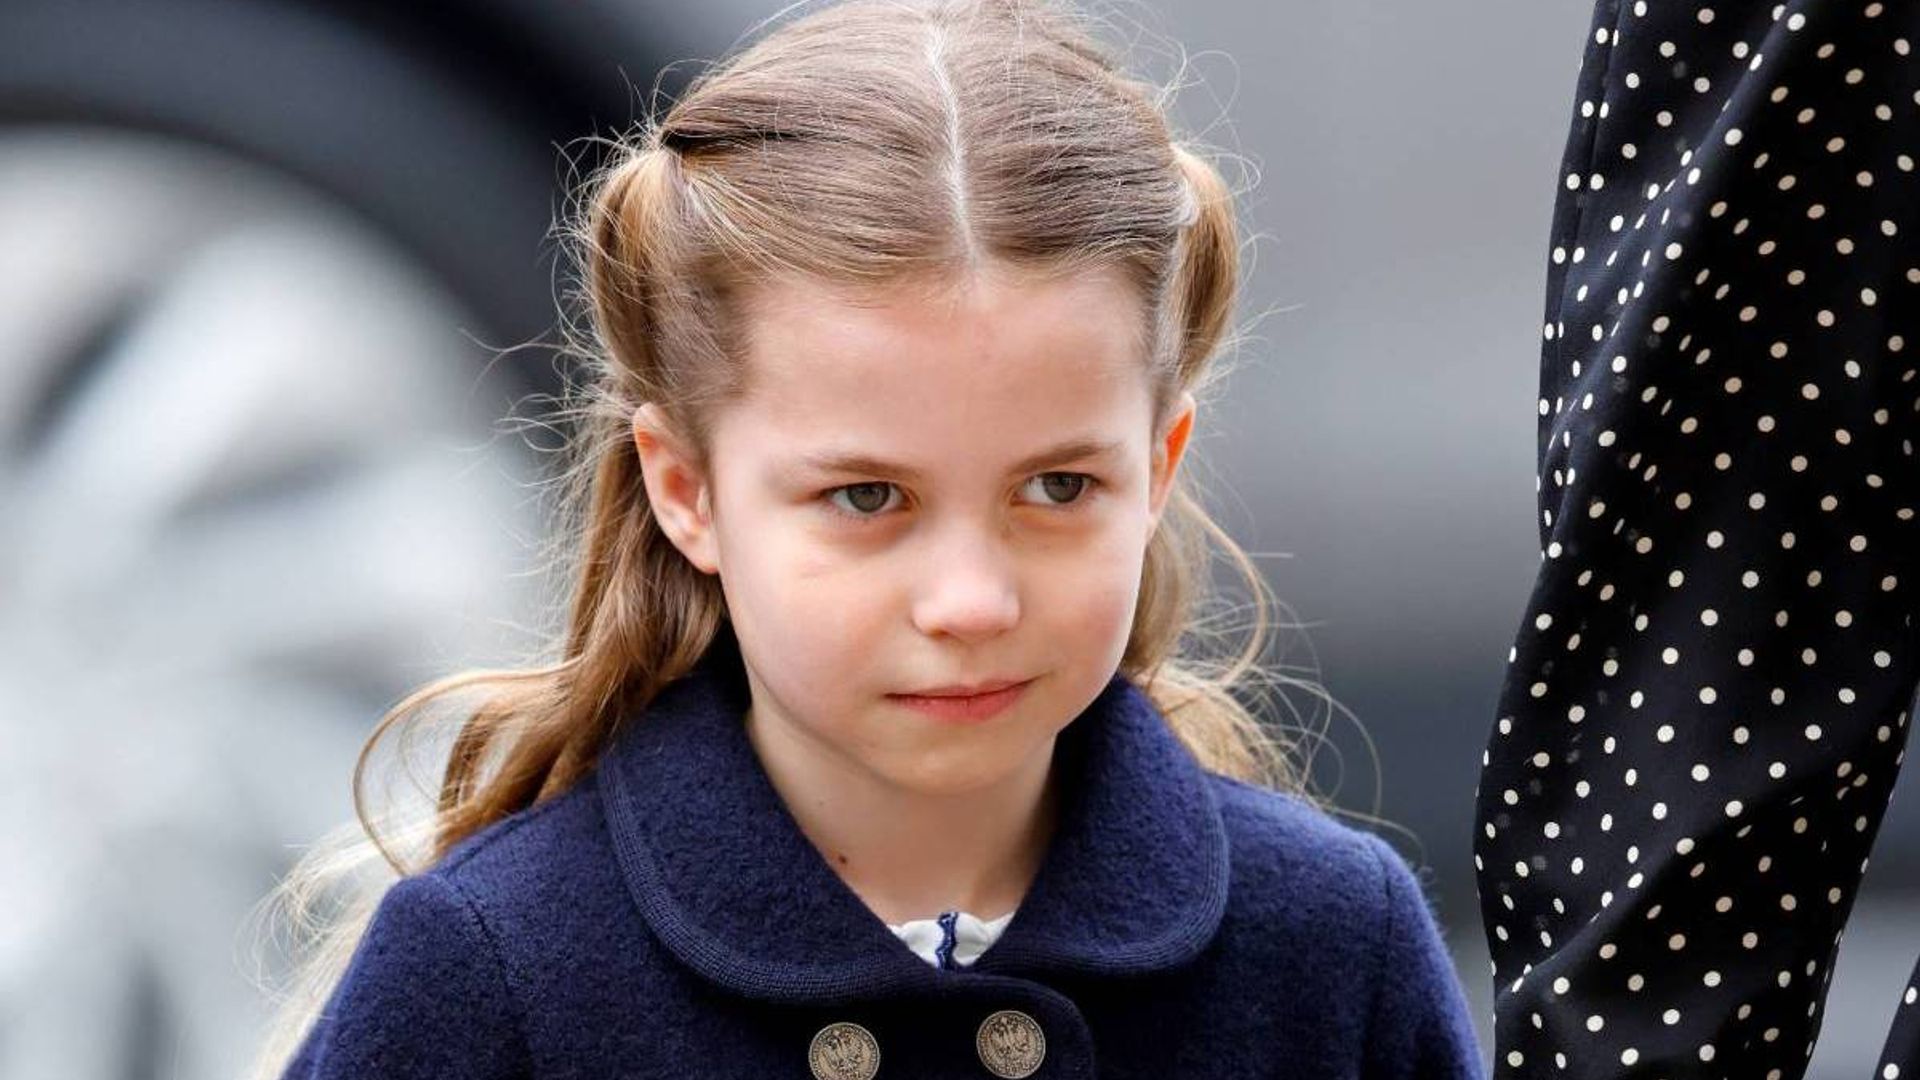 Princess Charlotte's birthday photos had sweet hidden detail – did you spot it?